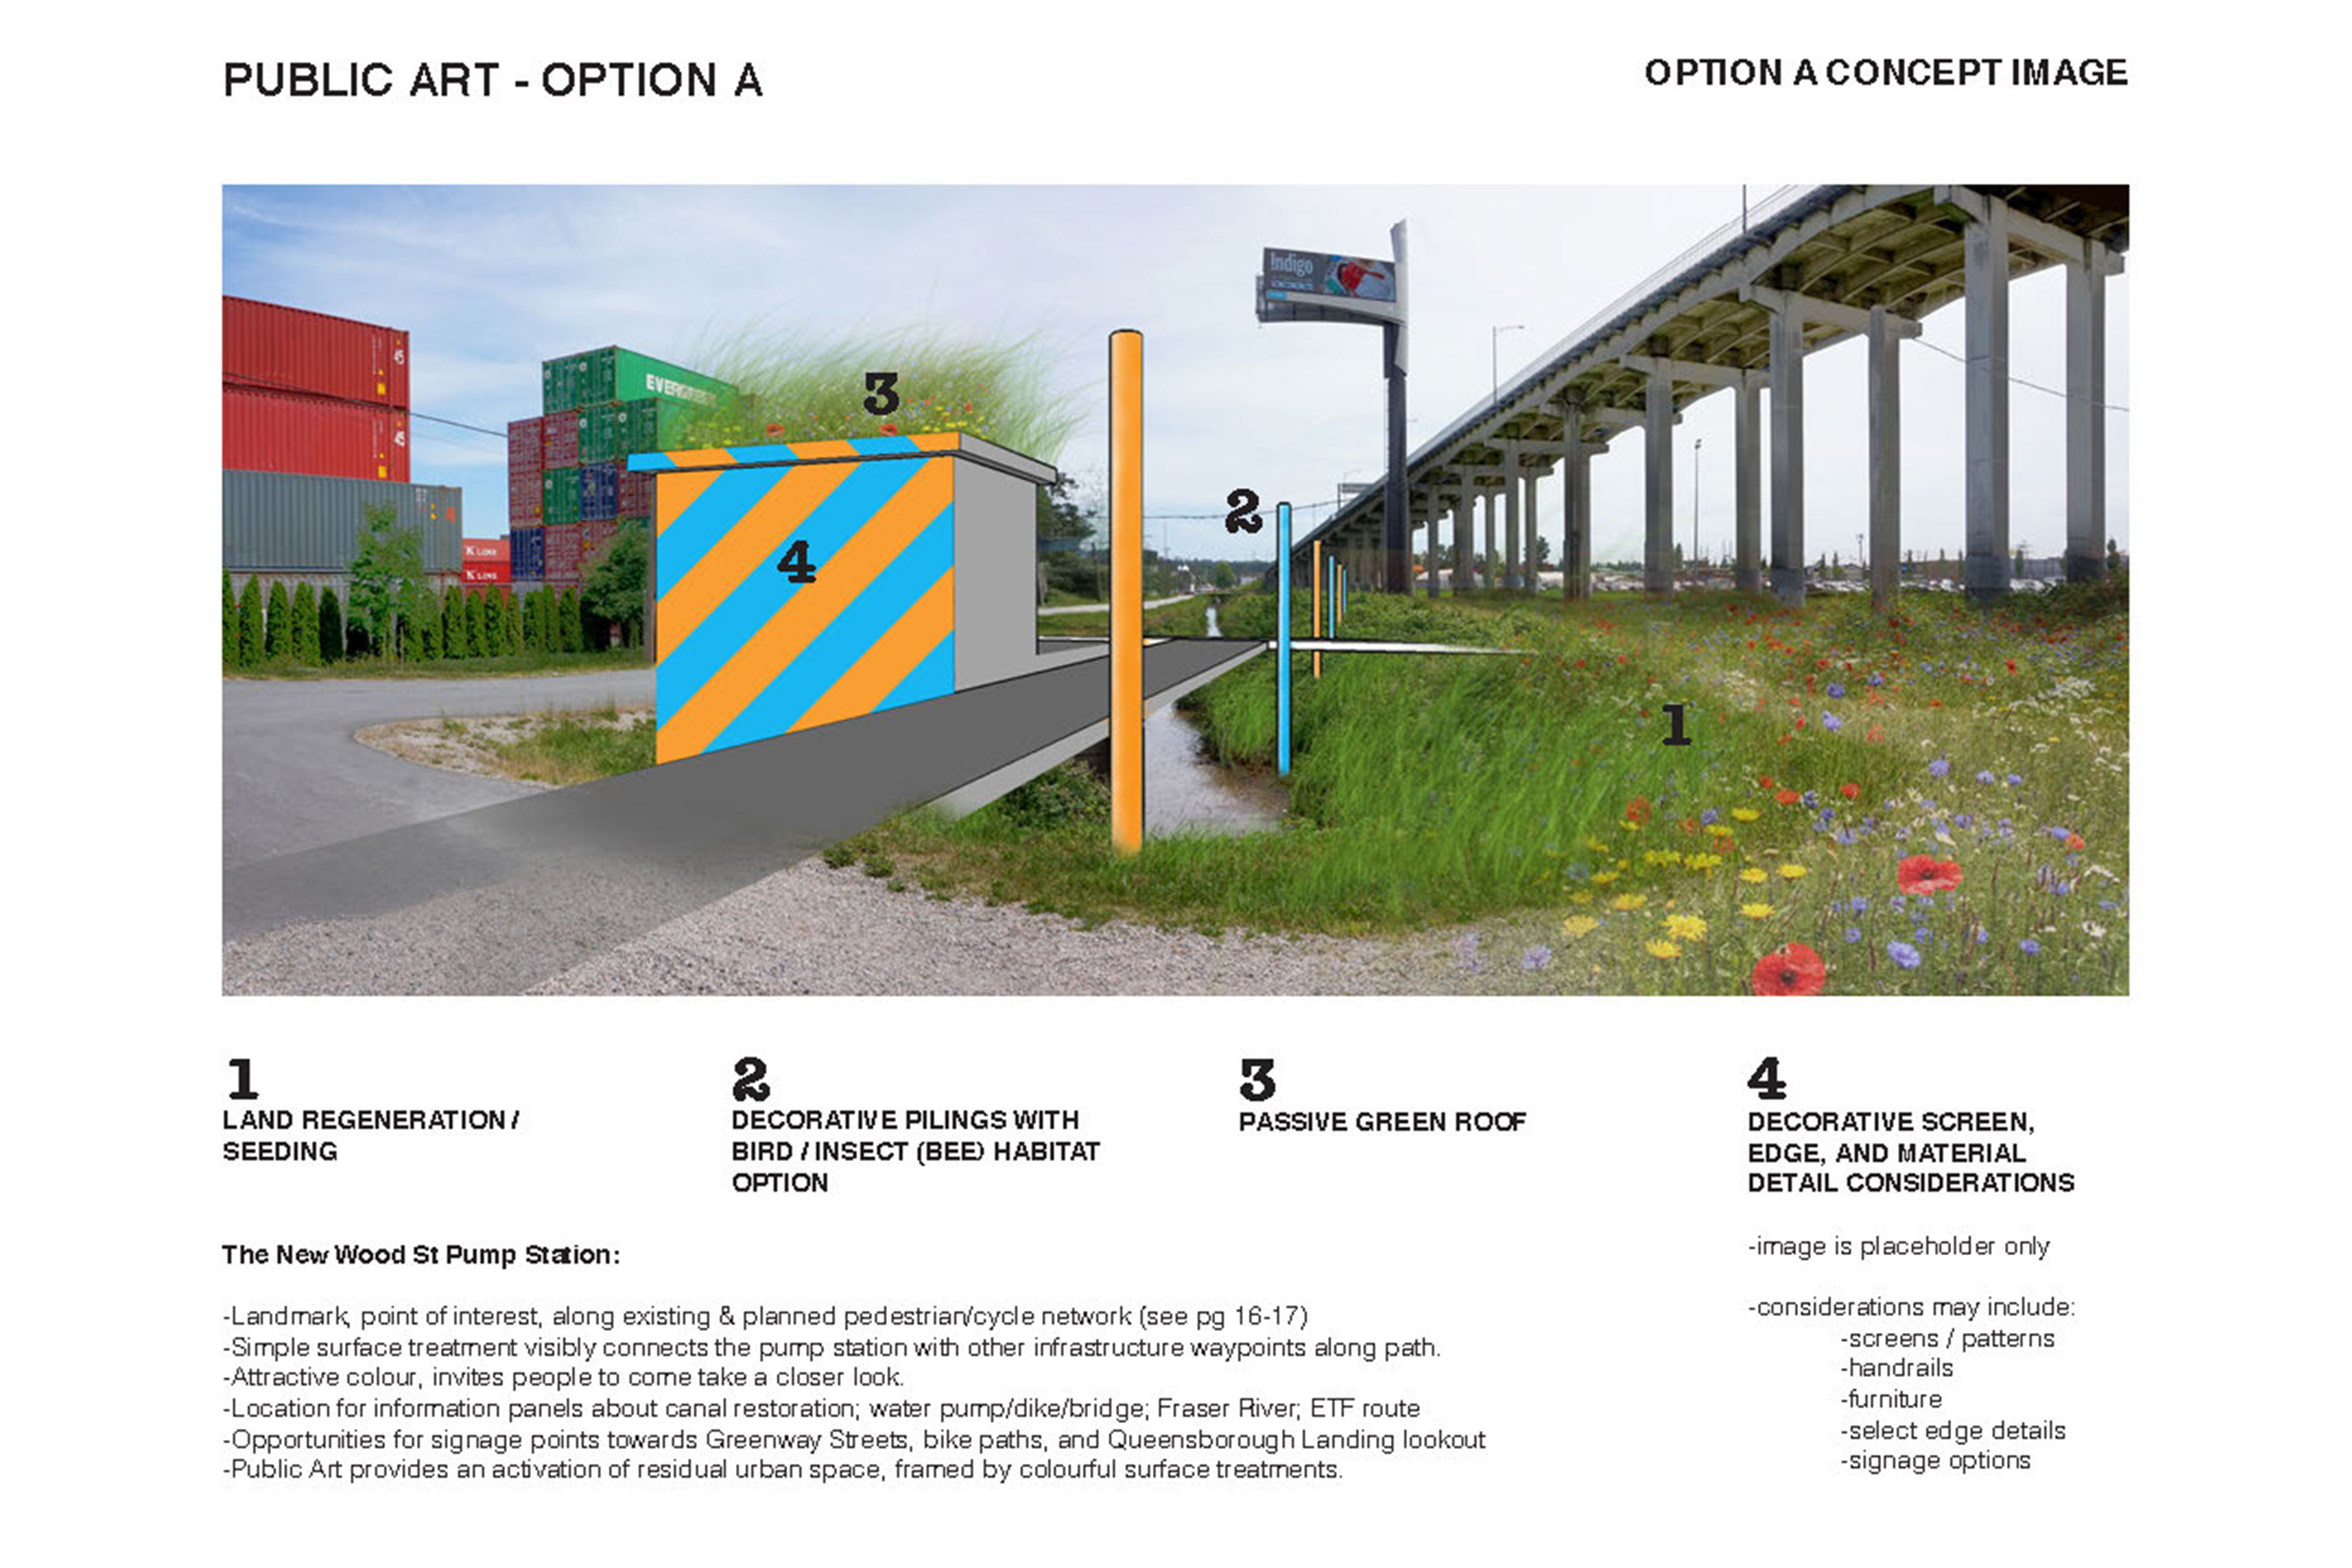 Wood Street Pump Station – Public Art Consultation